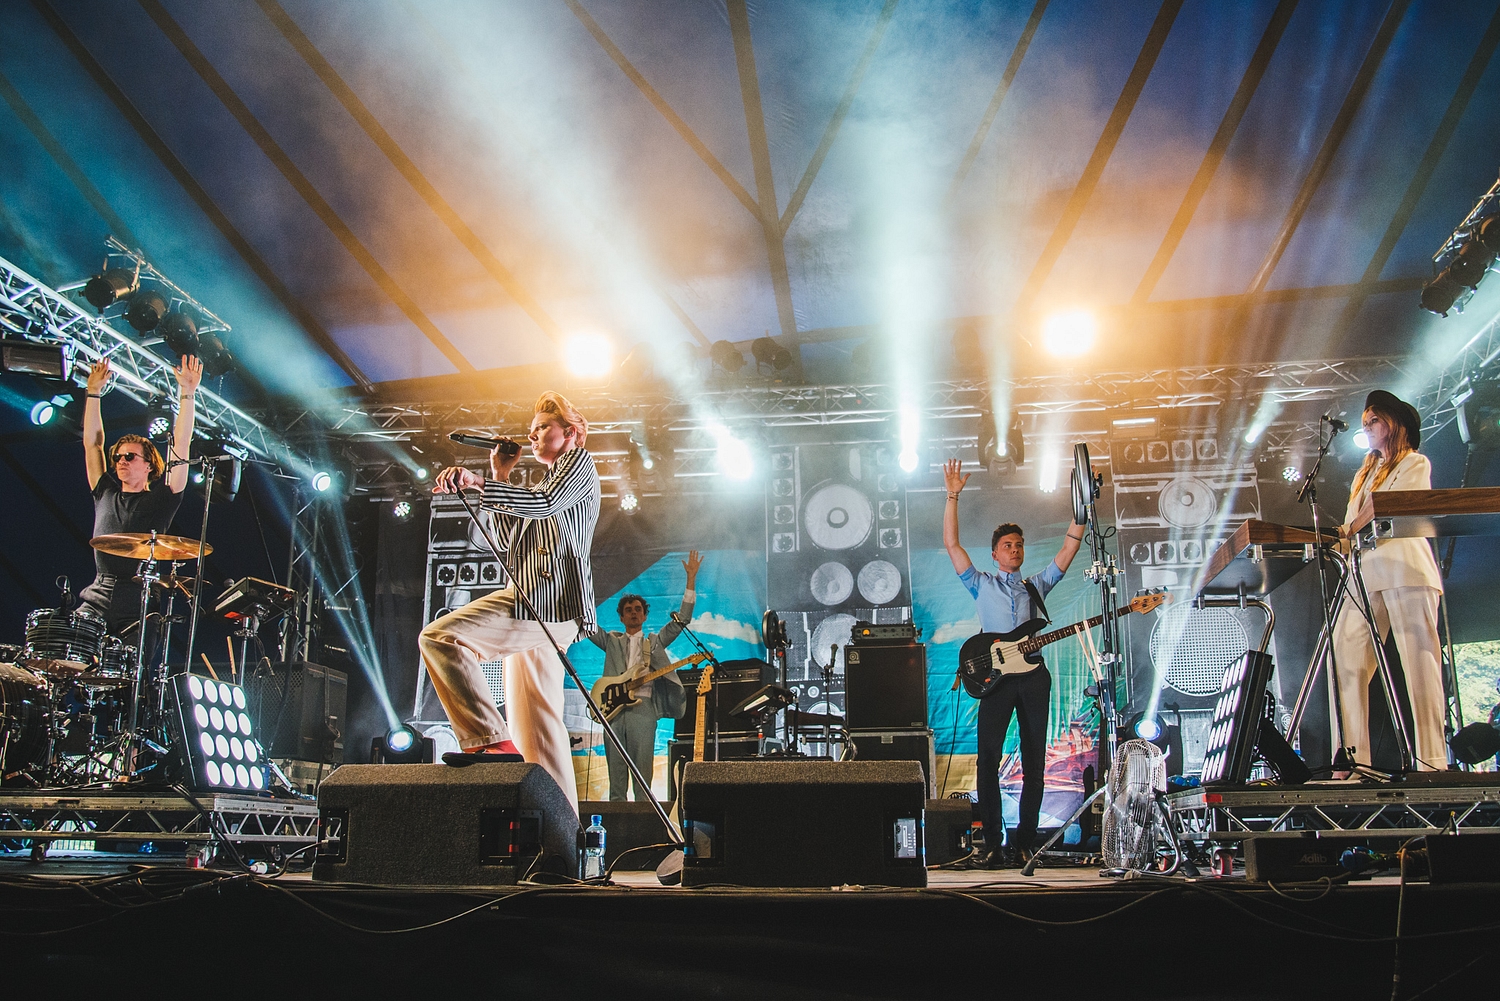 La Roux gives electro-pop a striking edge at Latitude 2015